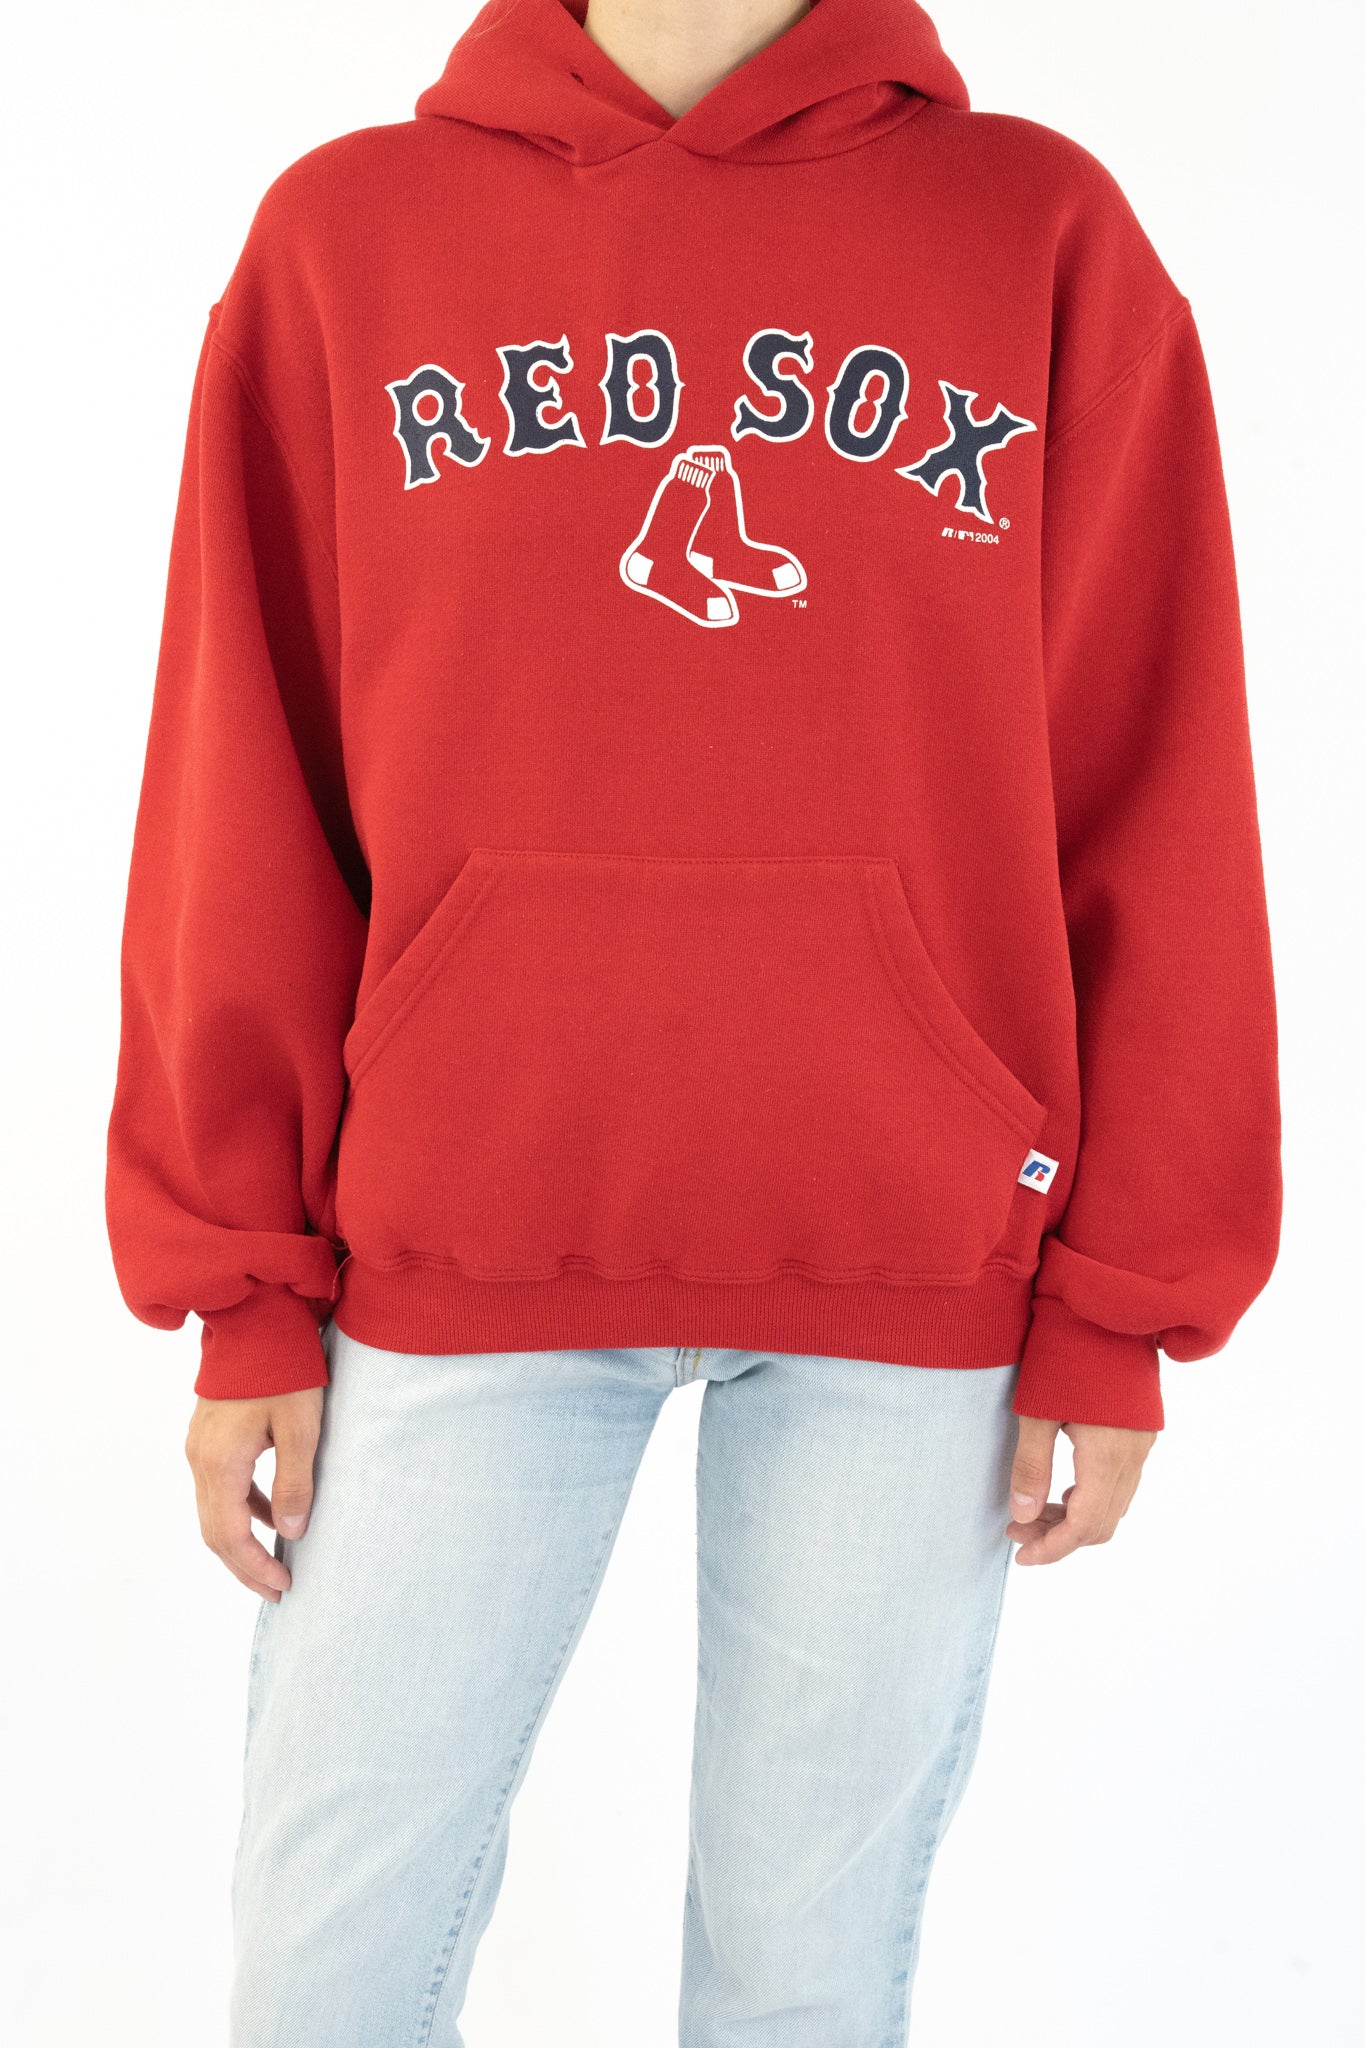 Vintage Boston Red Sox Sweatshirt Red Sox Crewneck Boston Red 